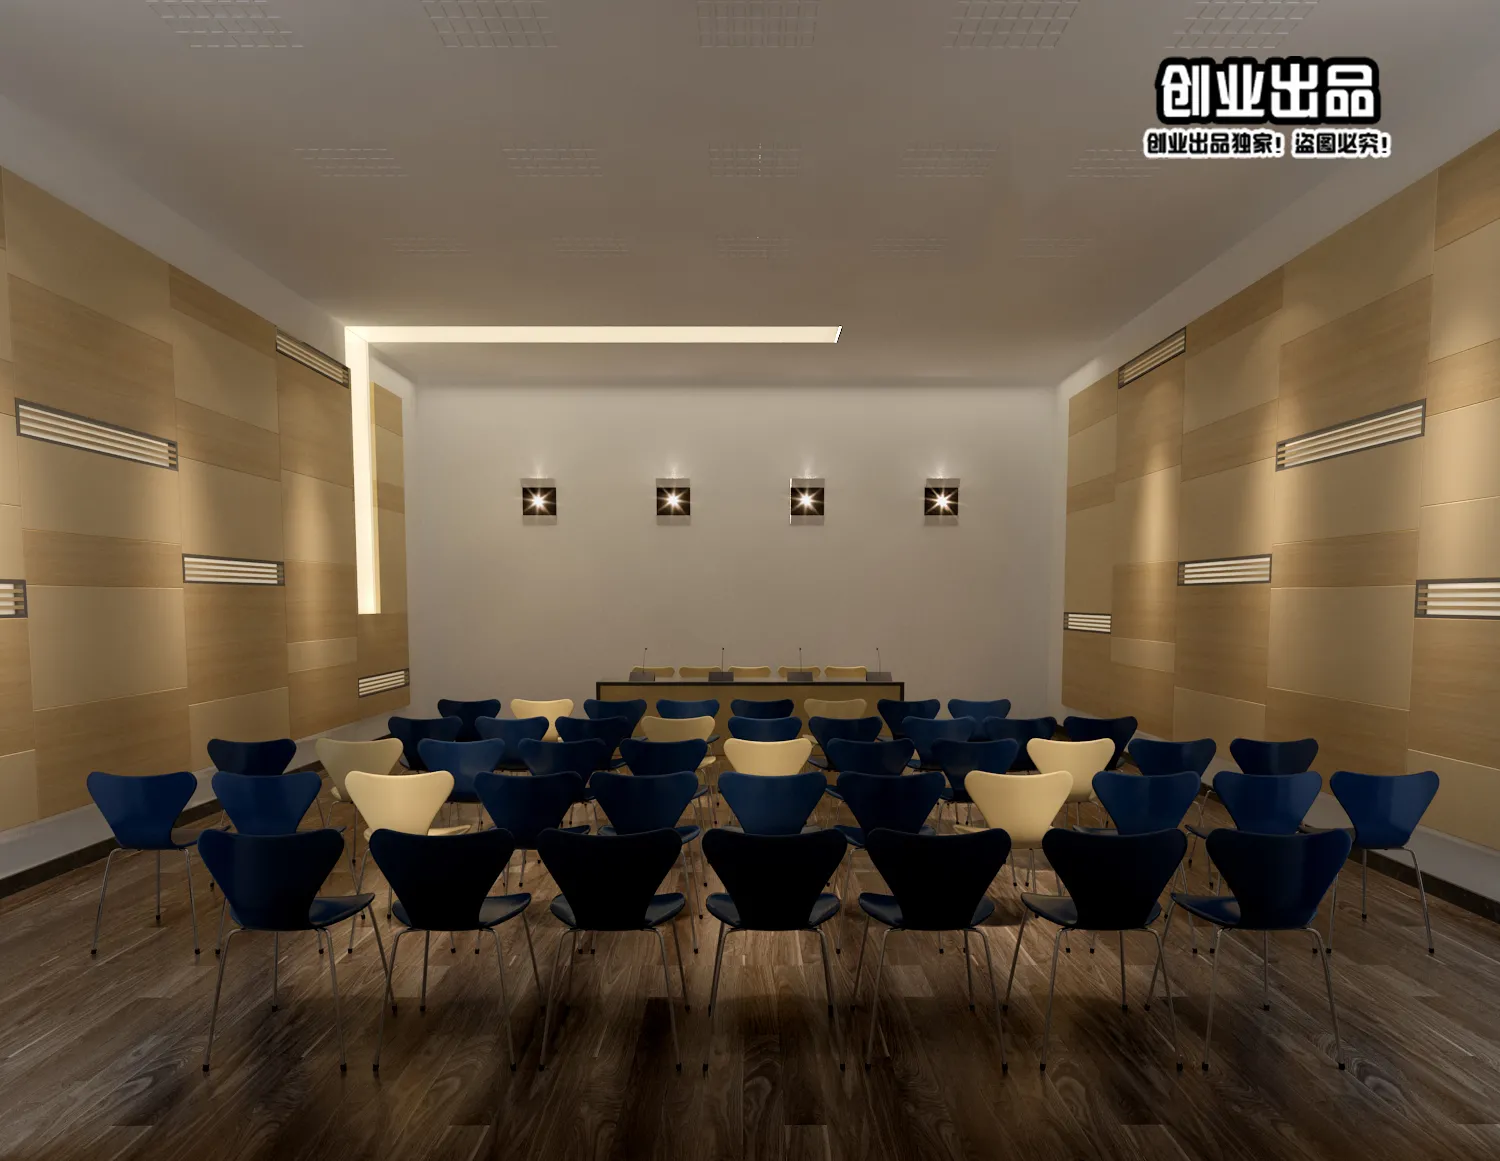 3D SCHOOL INTERIOR (VRAY) – LECTURE HALL 3D SCENES – 053